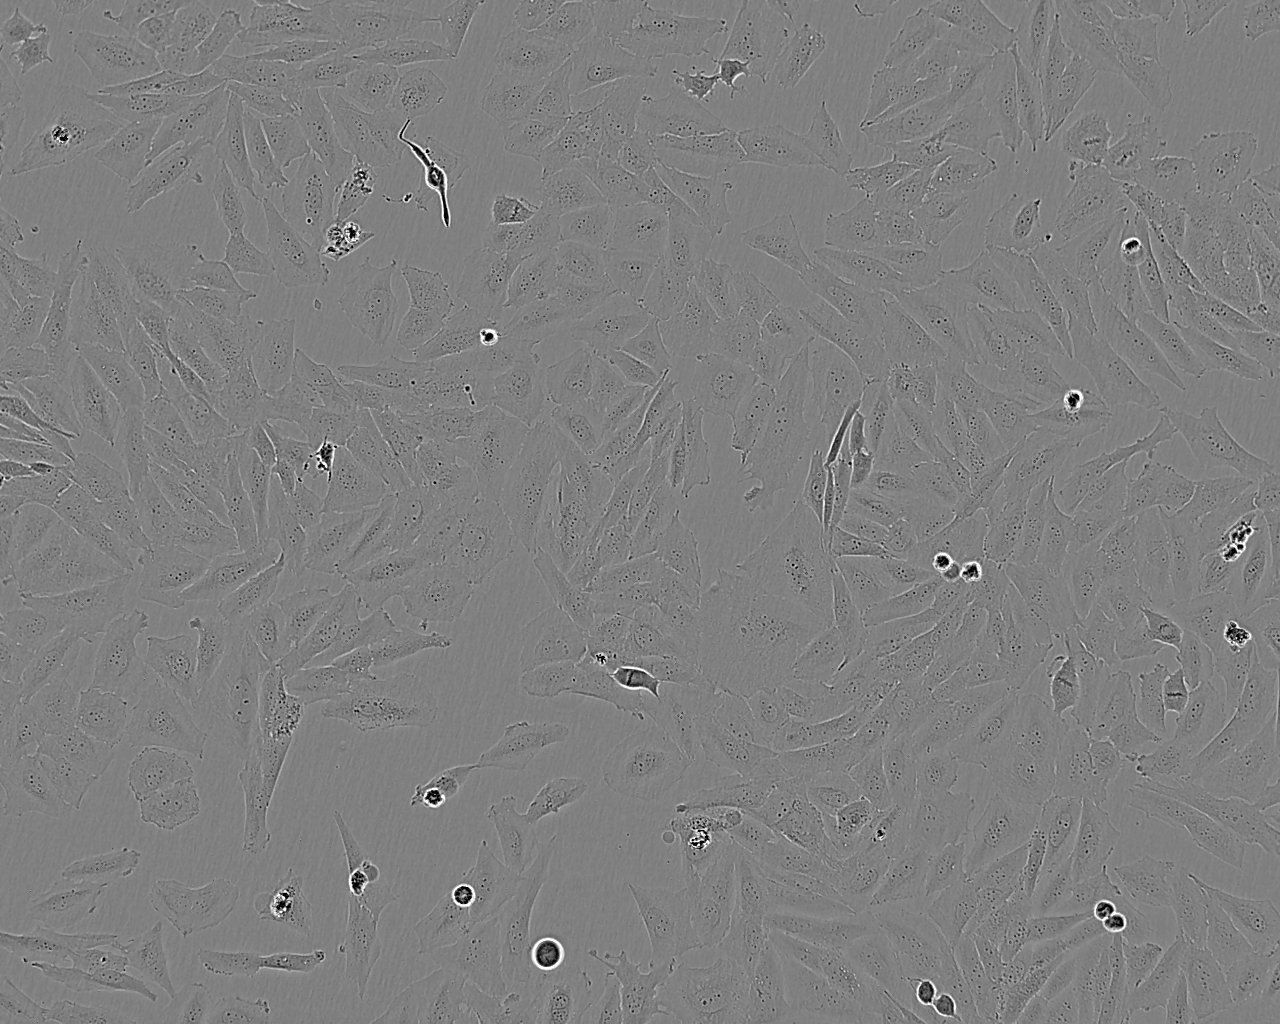 HT-1376 epithelioid cells人膀胱癌细胞系,HT-1376 epithelioid cells